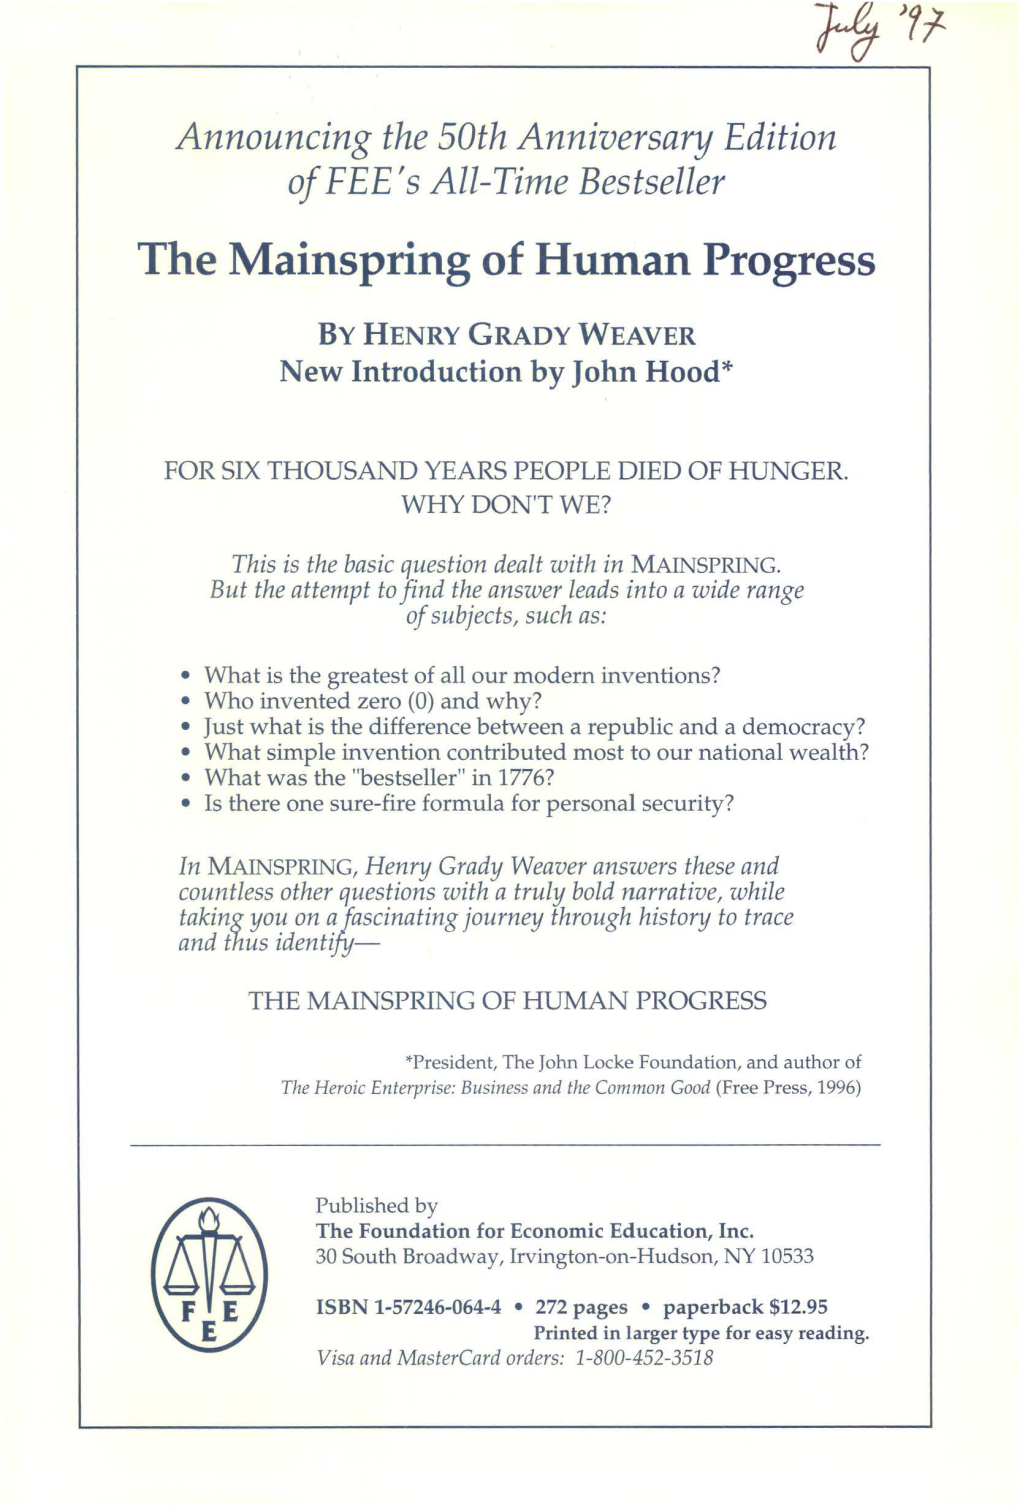 The Mainspring of Human Progress Announcement